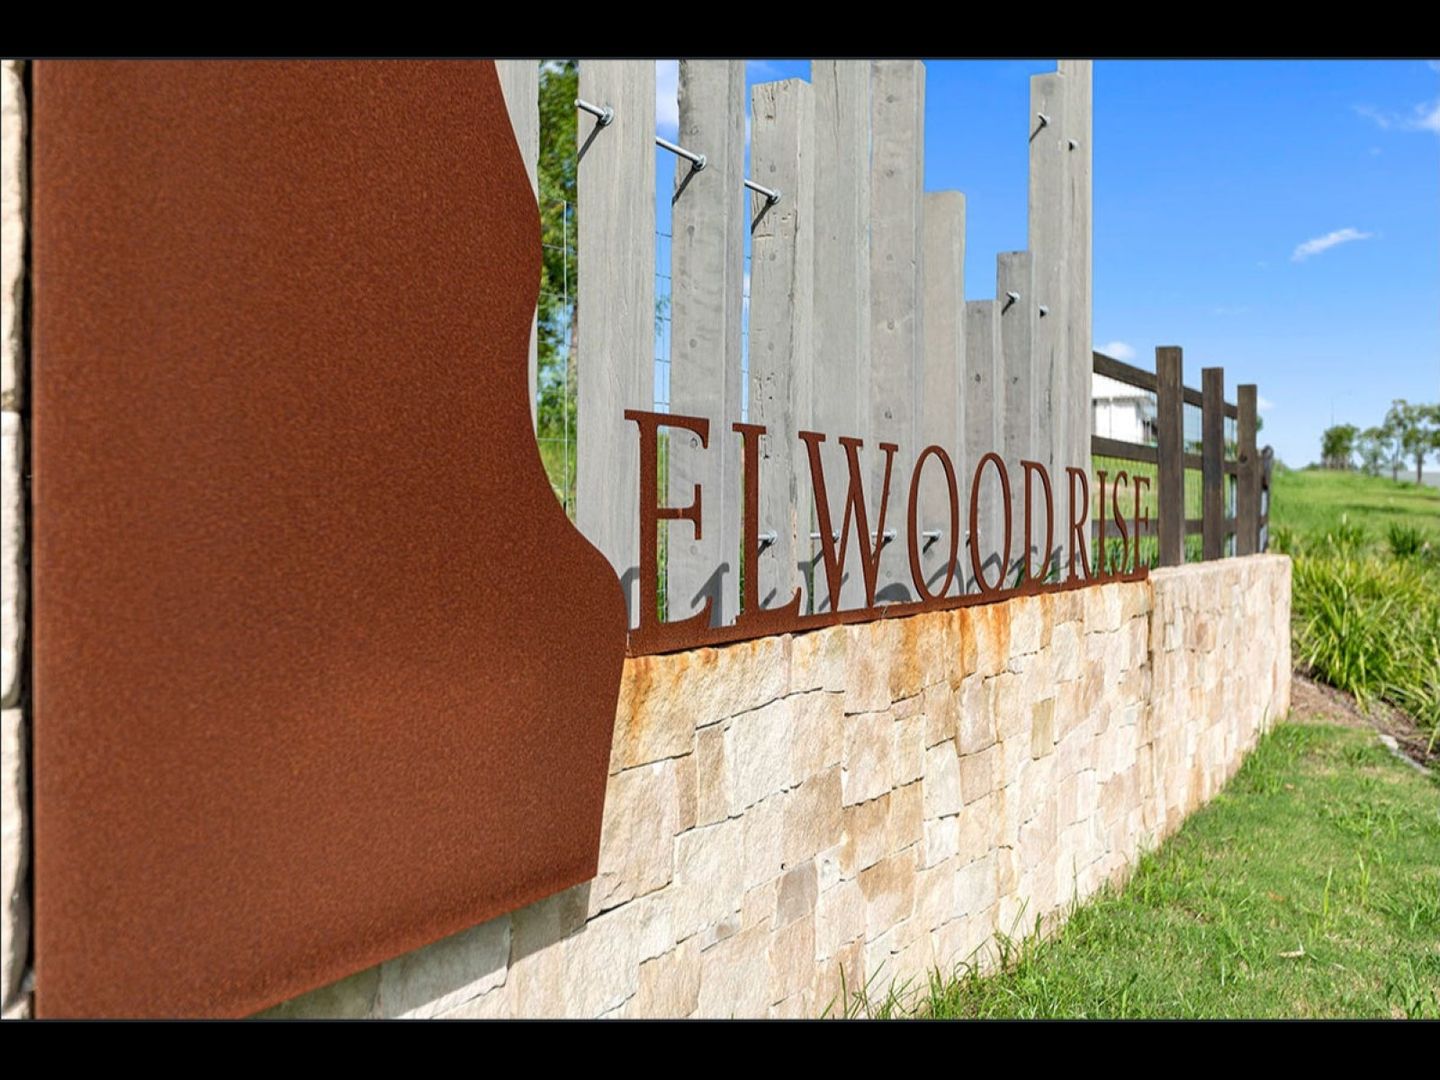 53 Elwood Rise Vista, D'Aguilar, QLD 4514, Image 2